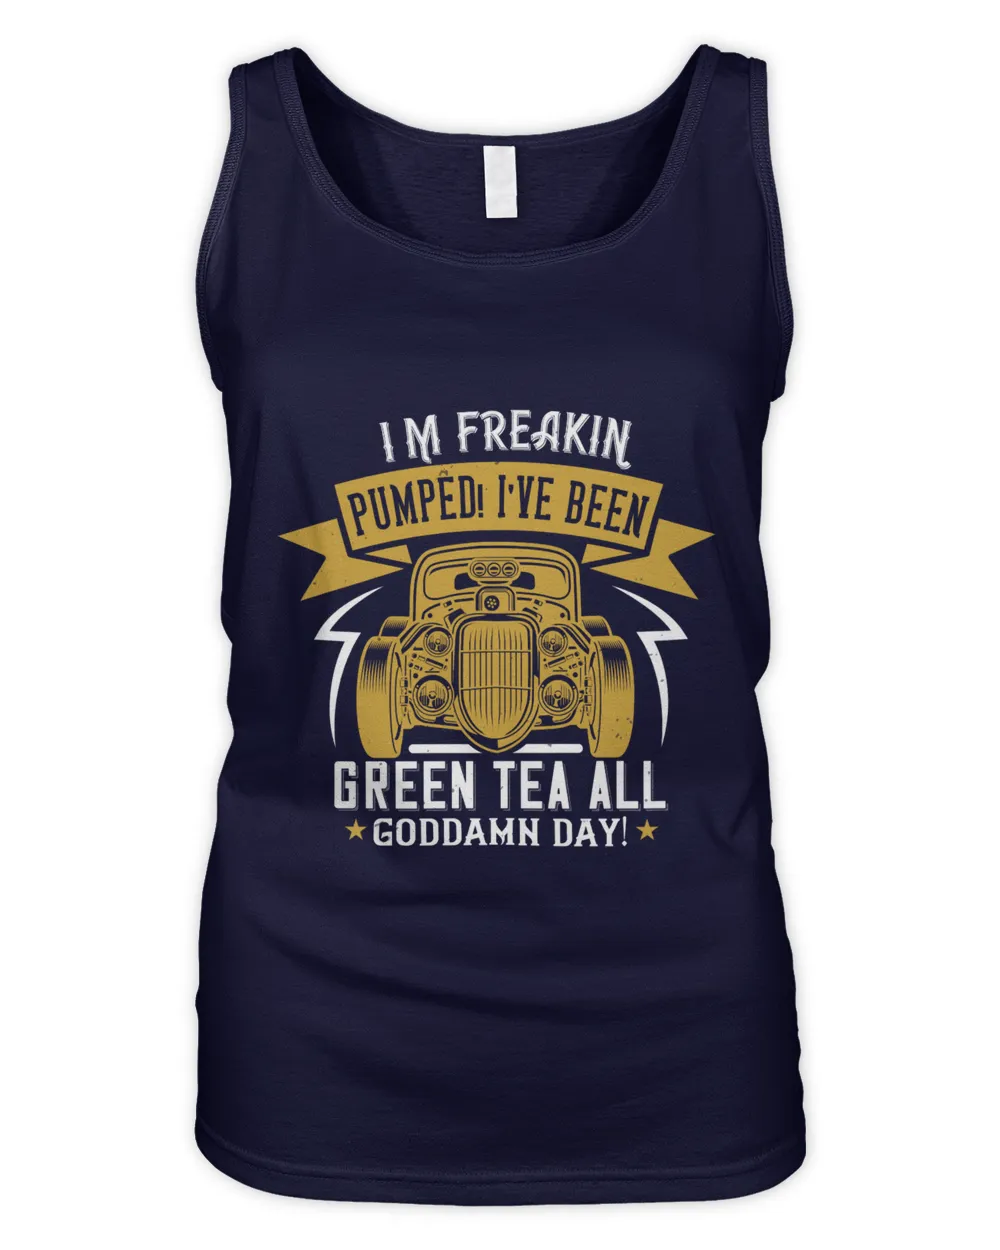 I'm freakin pumped! I've been drinking green tea all goddamn day!-01